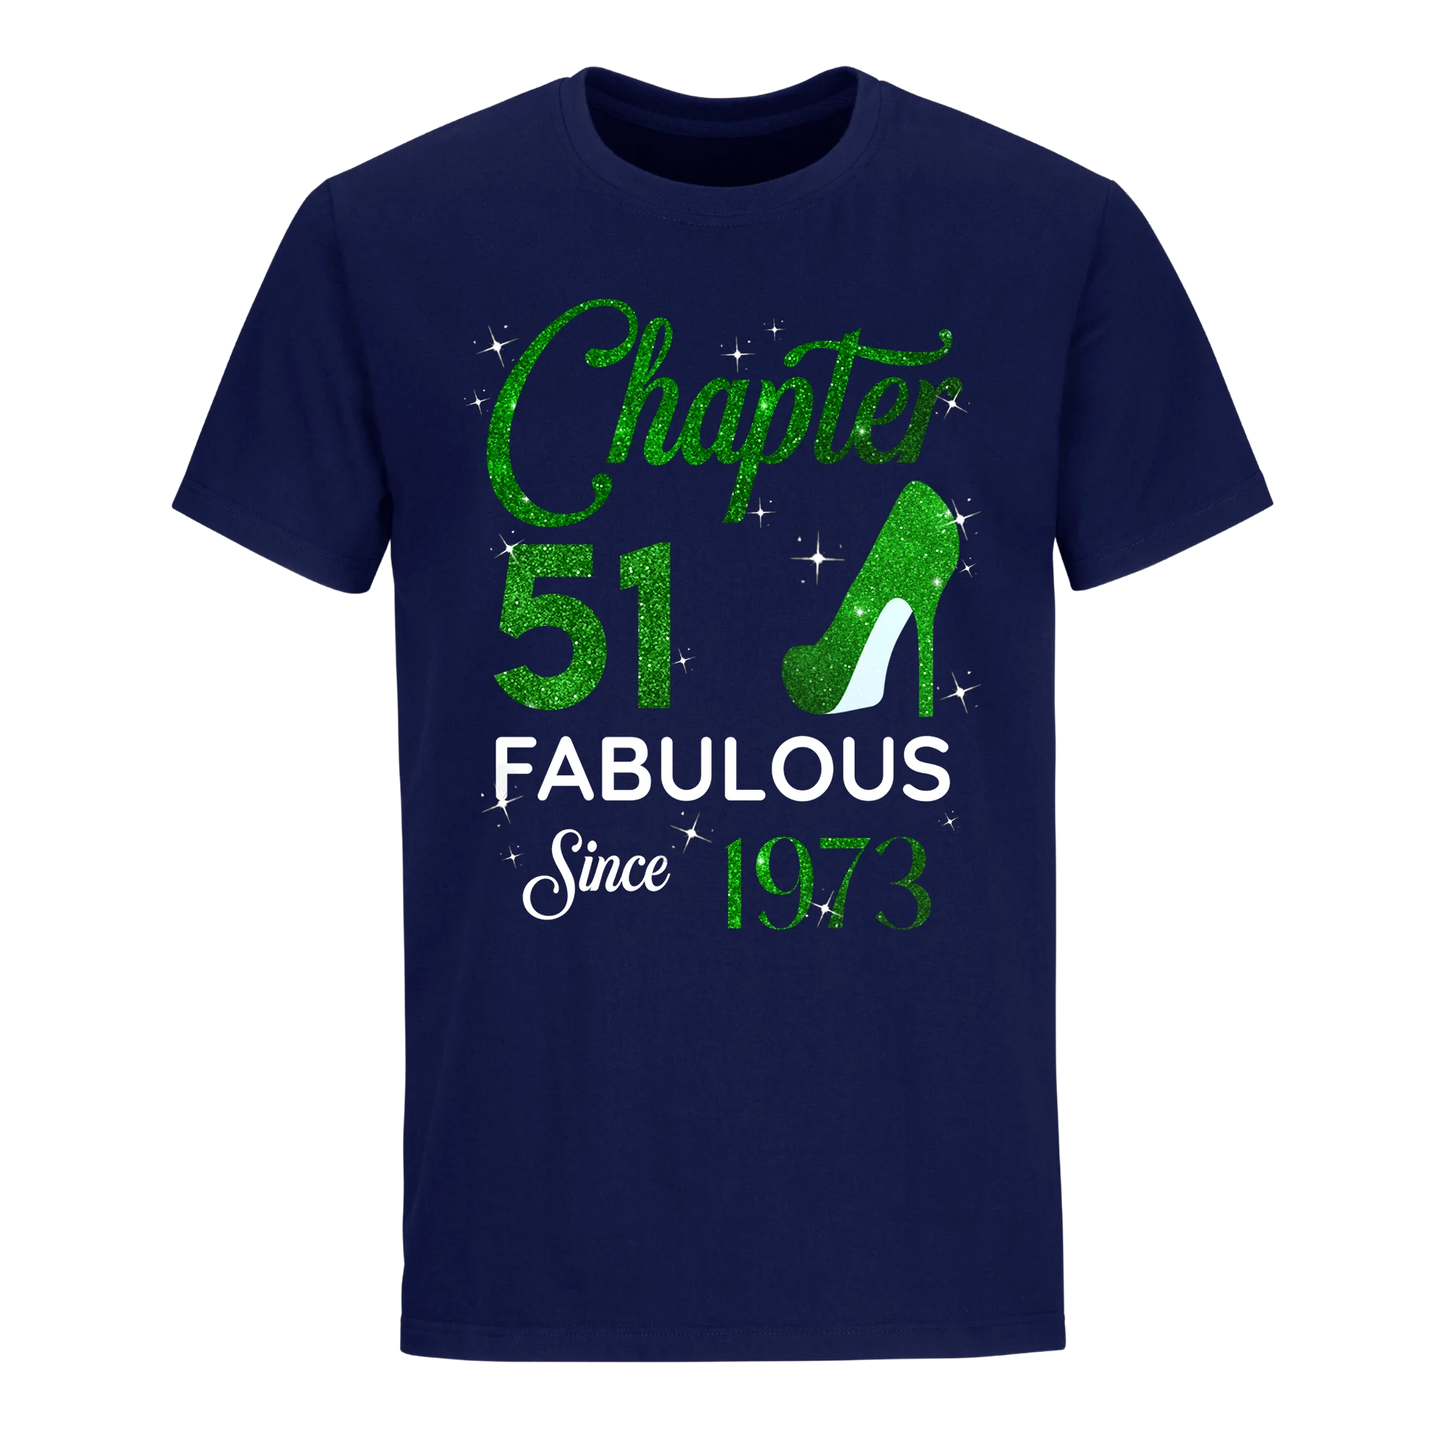 CHAPTER 51ST FABULOUS SINCE 1973 GREEN UNISEX SHIRT